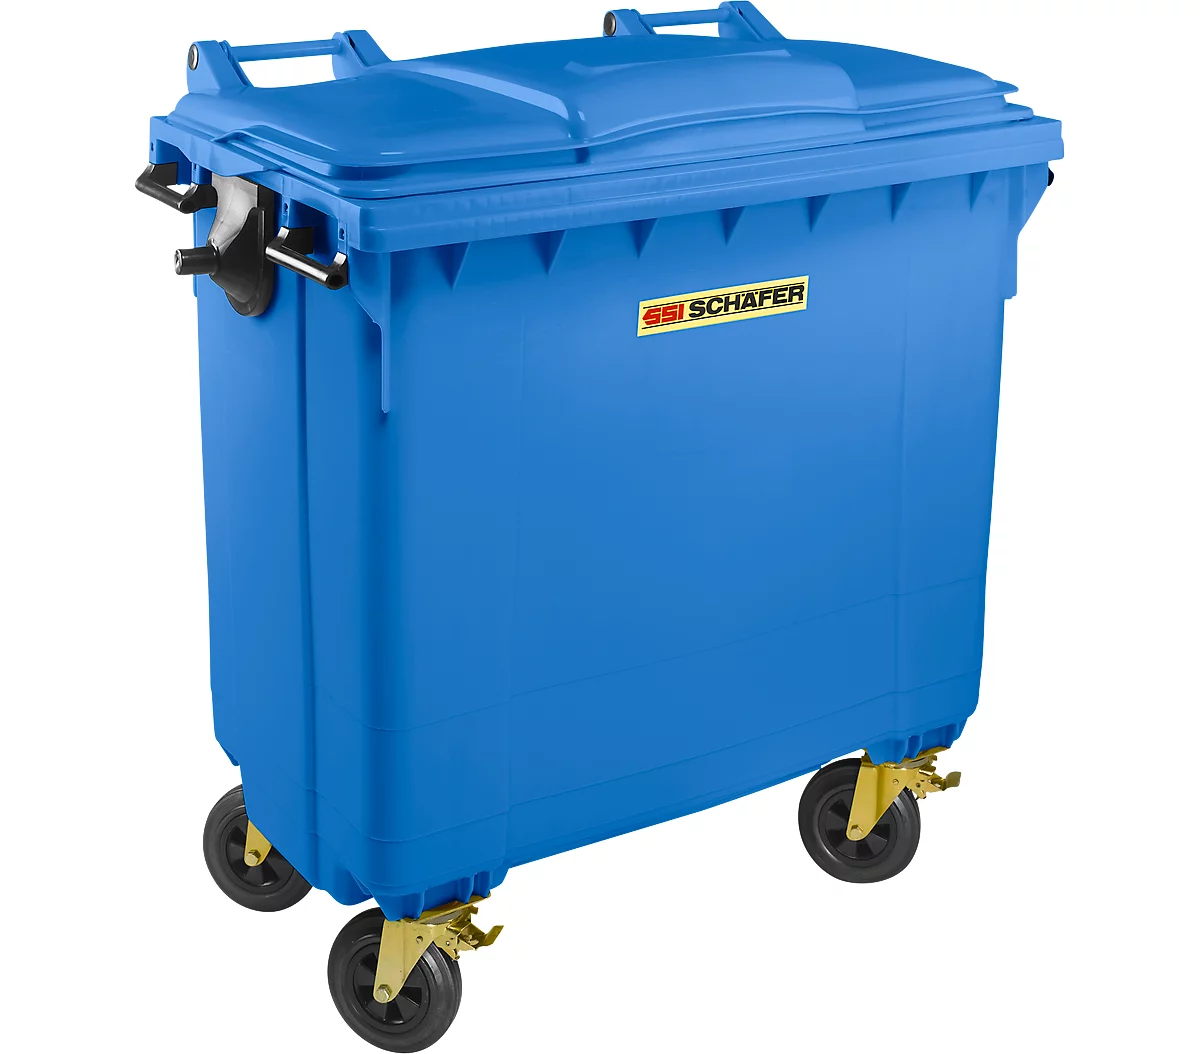 Müllcontainer MGB 770 FD, Kunststoff, 770 l, blau